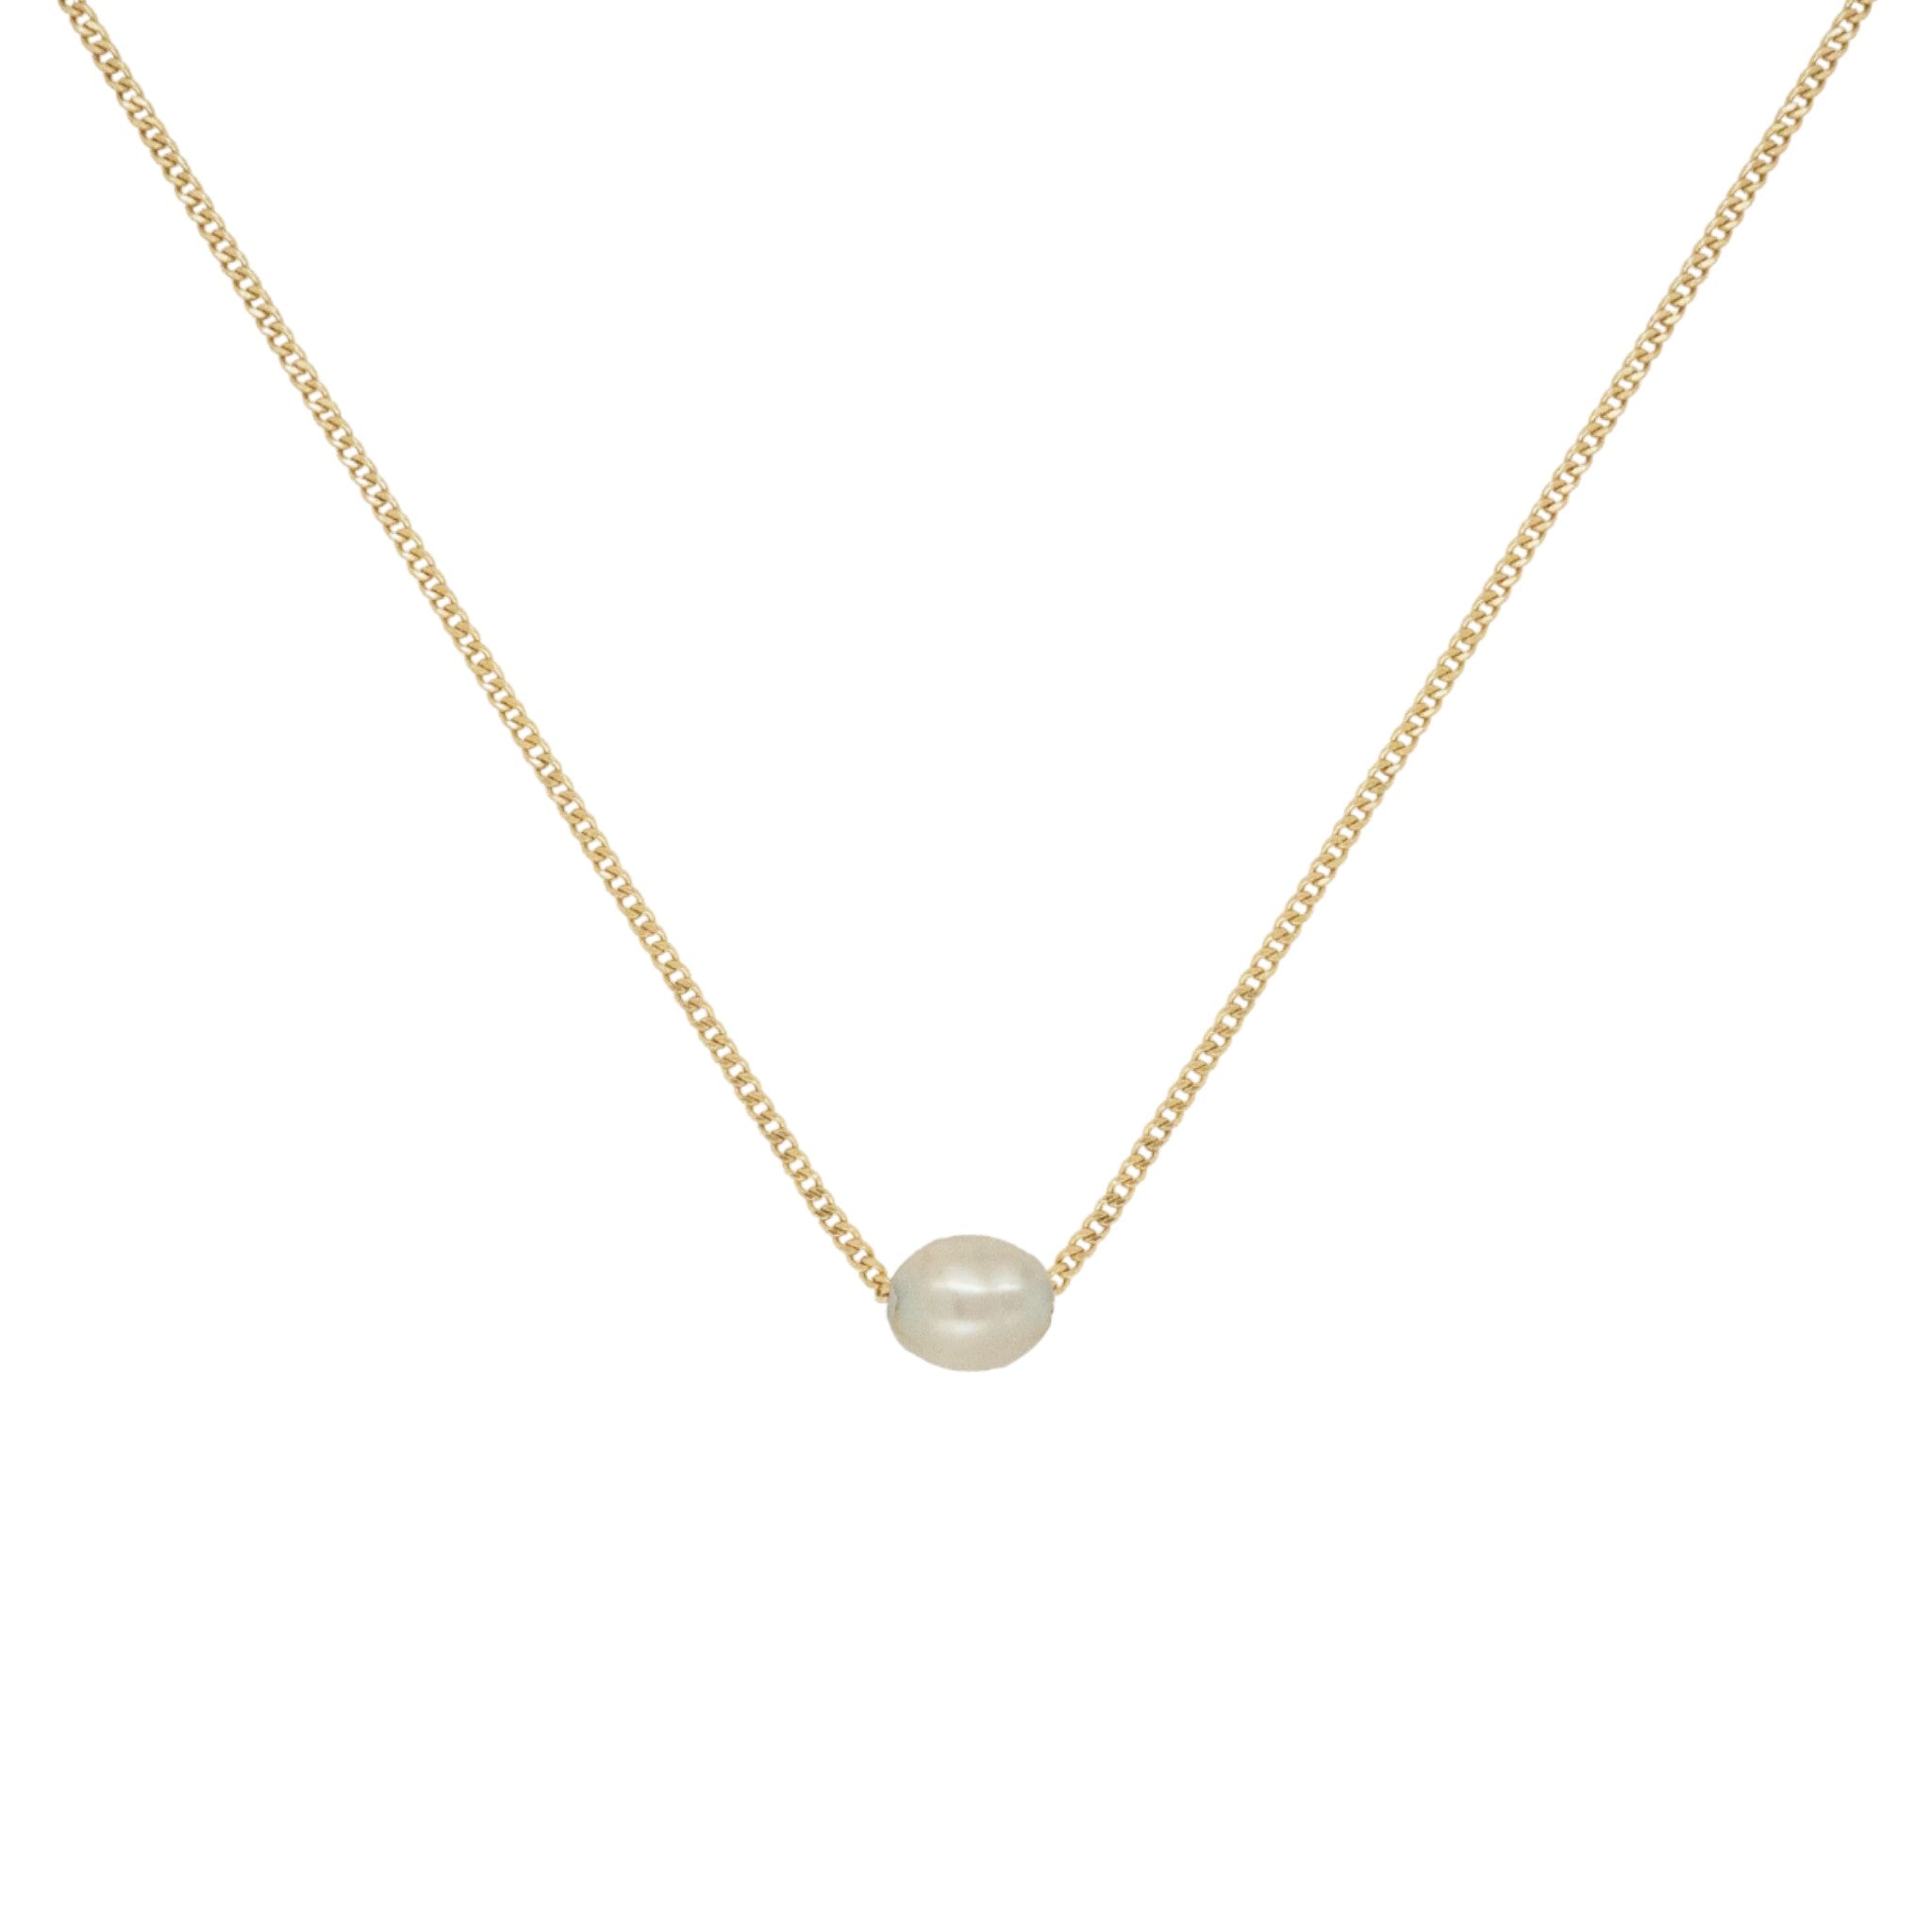 Mod + Jo - Felicity 16" Pearl Pendant Necklace - 14k Gold Fill